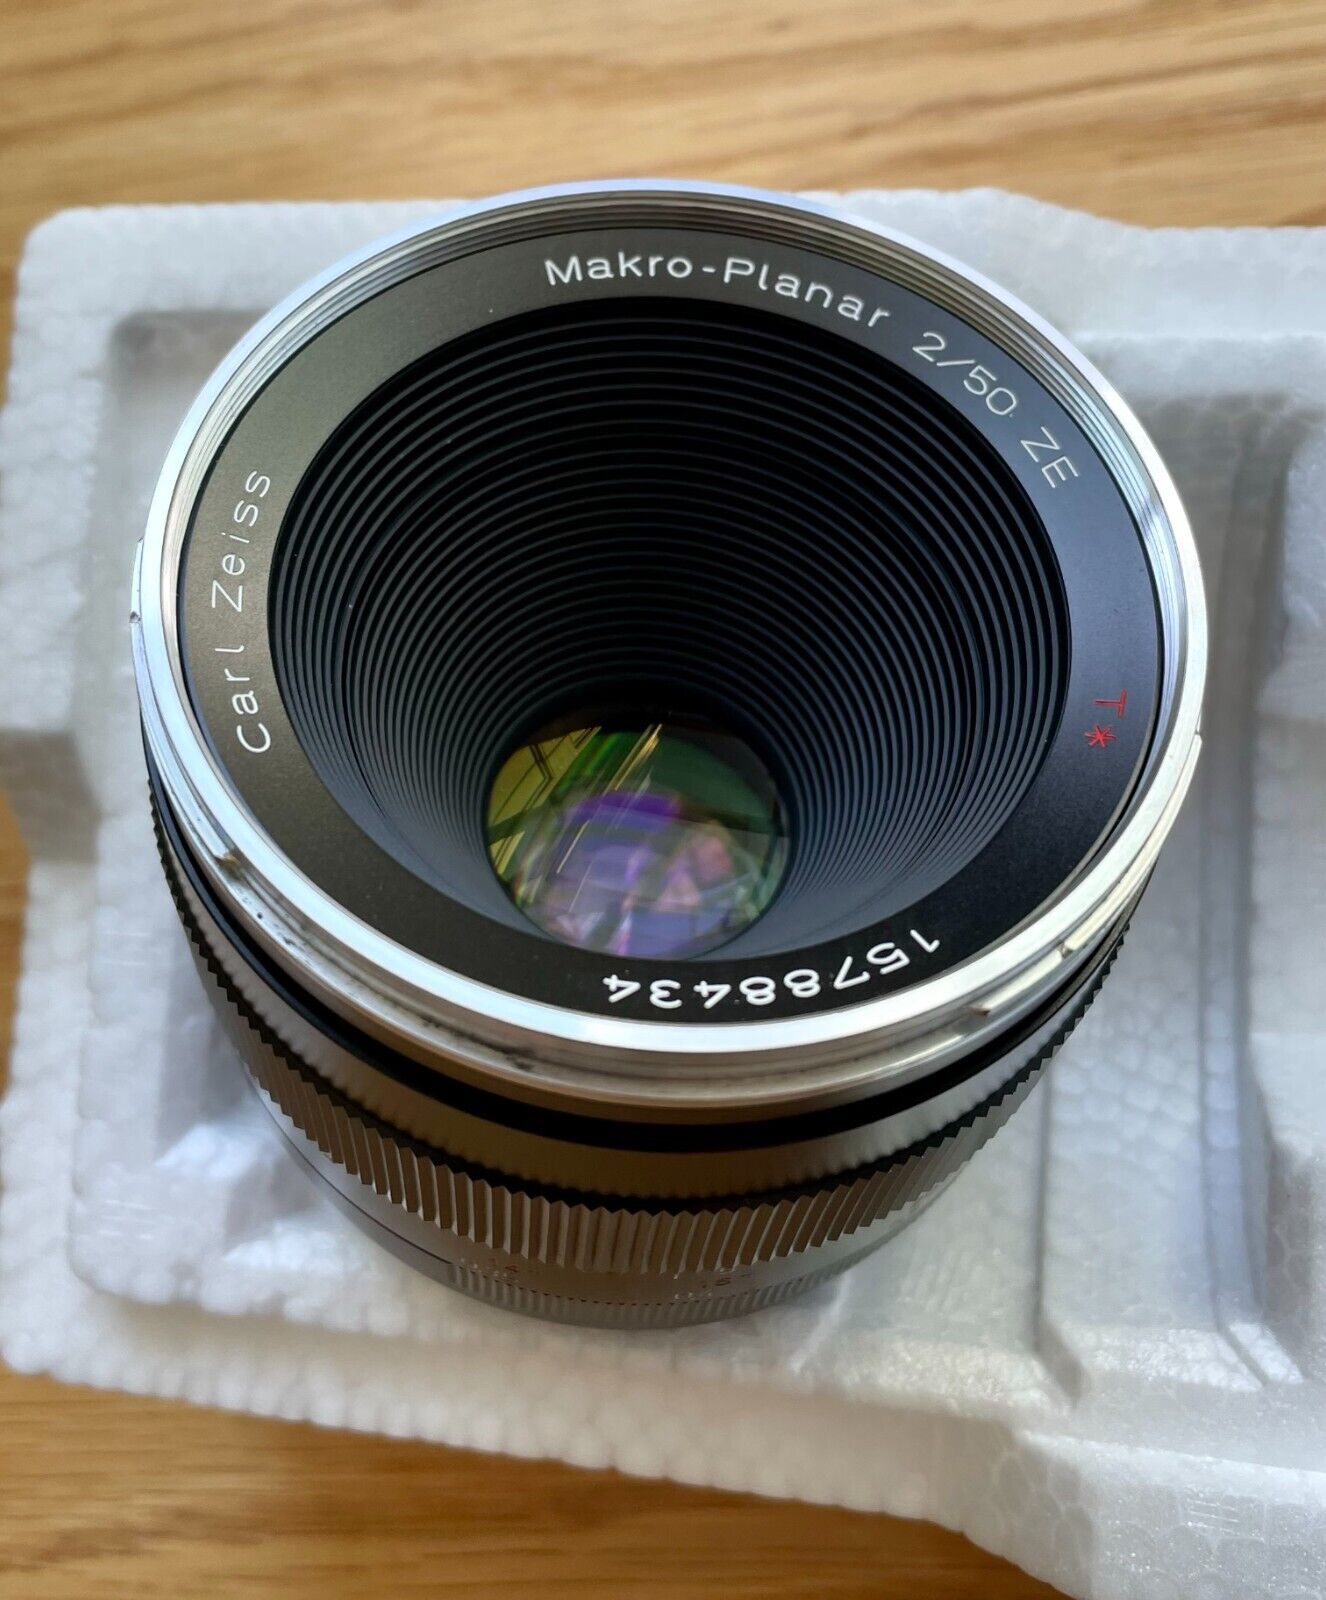 ZEISS Makro Planar T 50mm f/2 ZE Lens For Canon for sale online | eBay